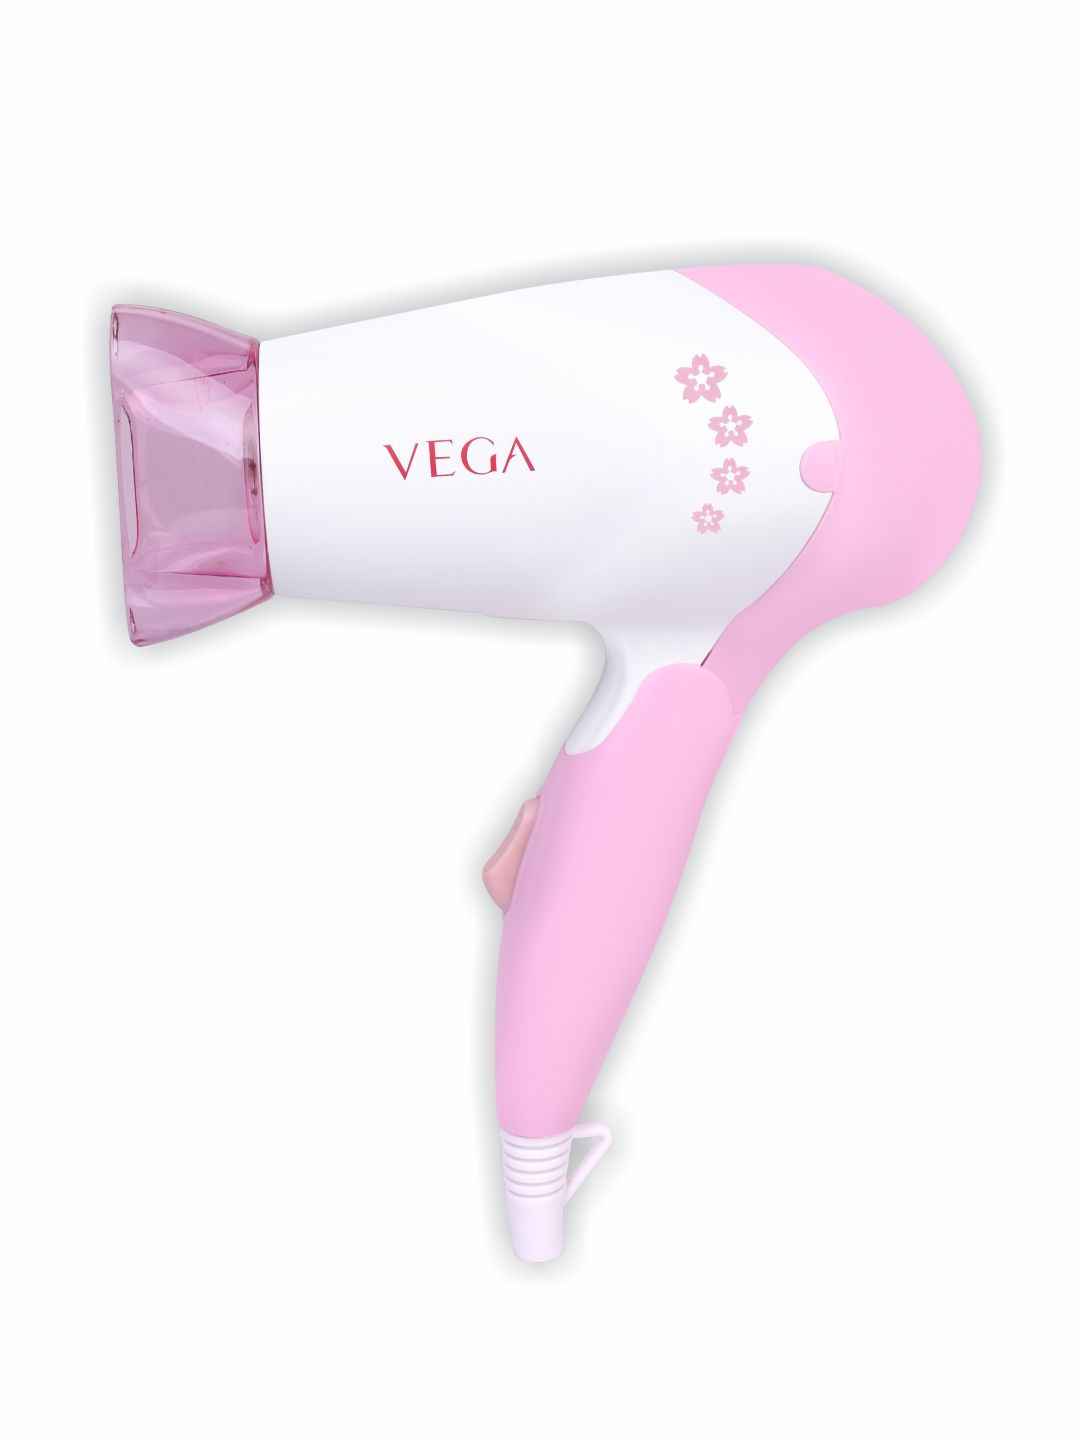 VEGA White & Pink Insta Glam 1000 Hair Dryer Price in India